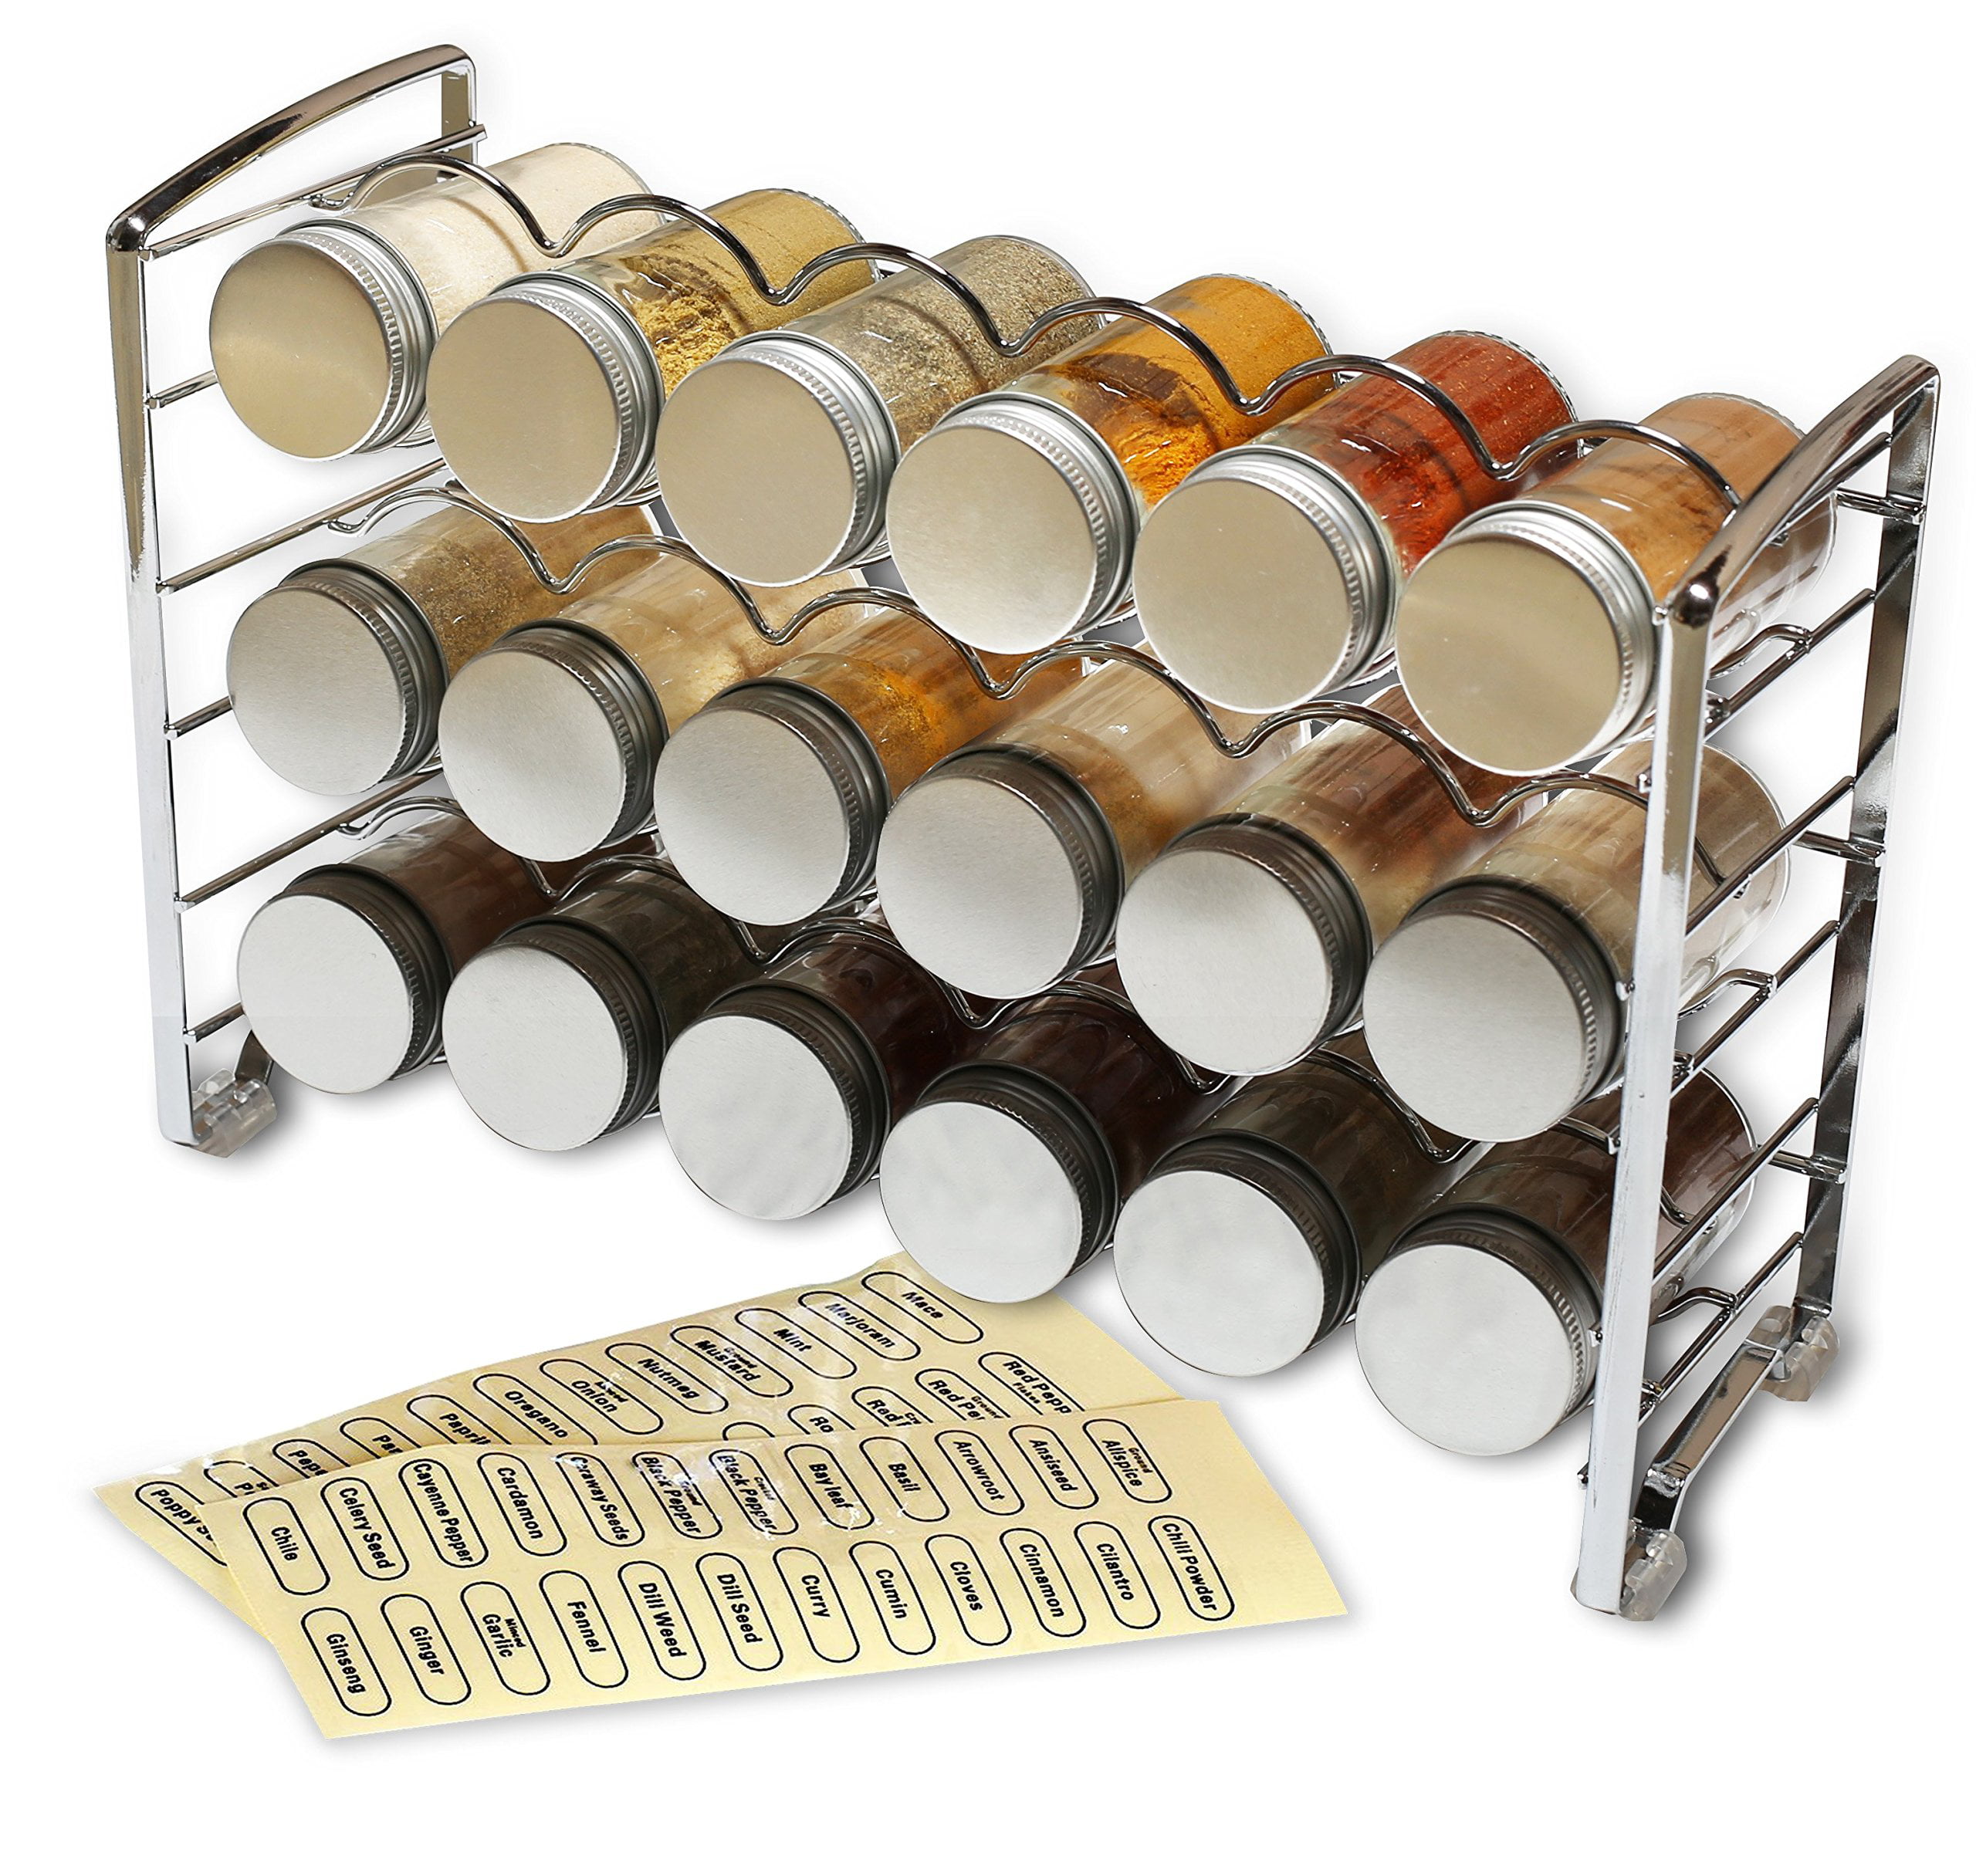 Polder Compact 18-Jar Spice Rack, Chrome, 11 x 3.5 x 7.5